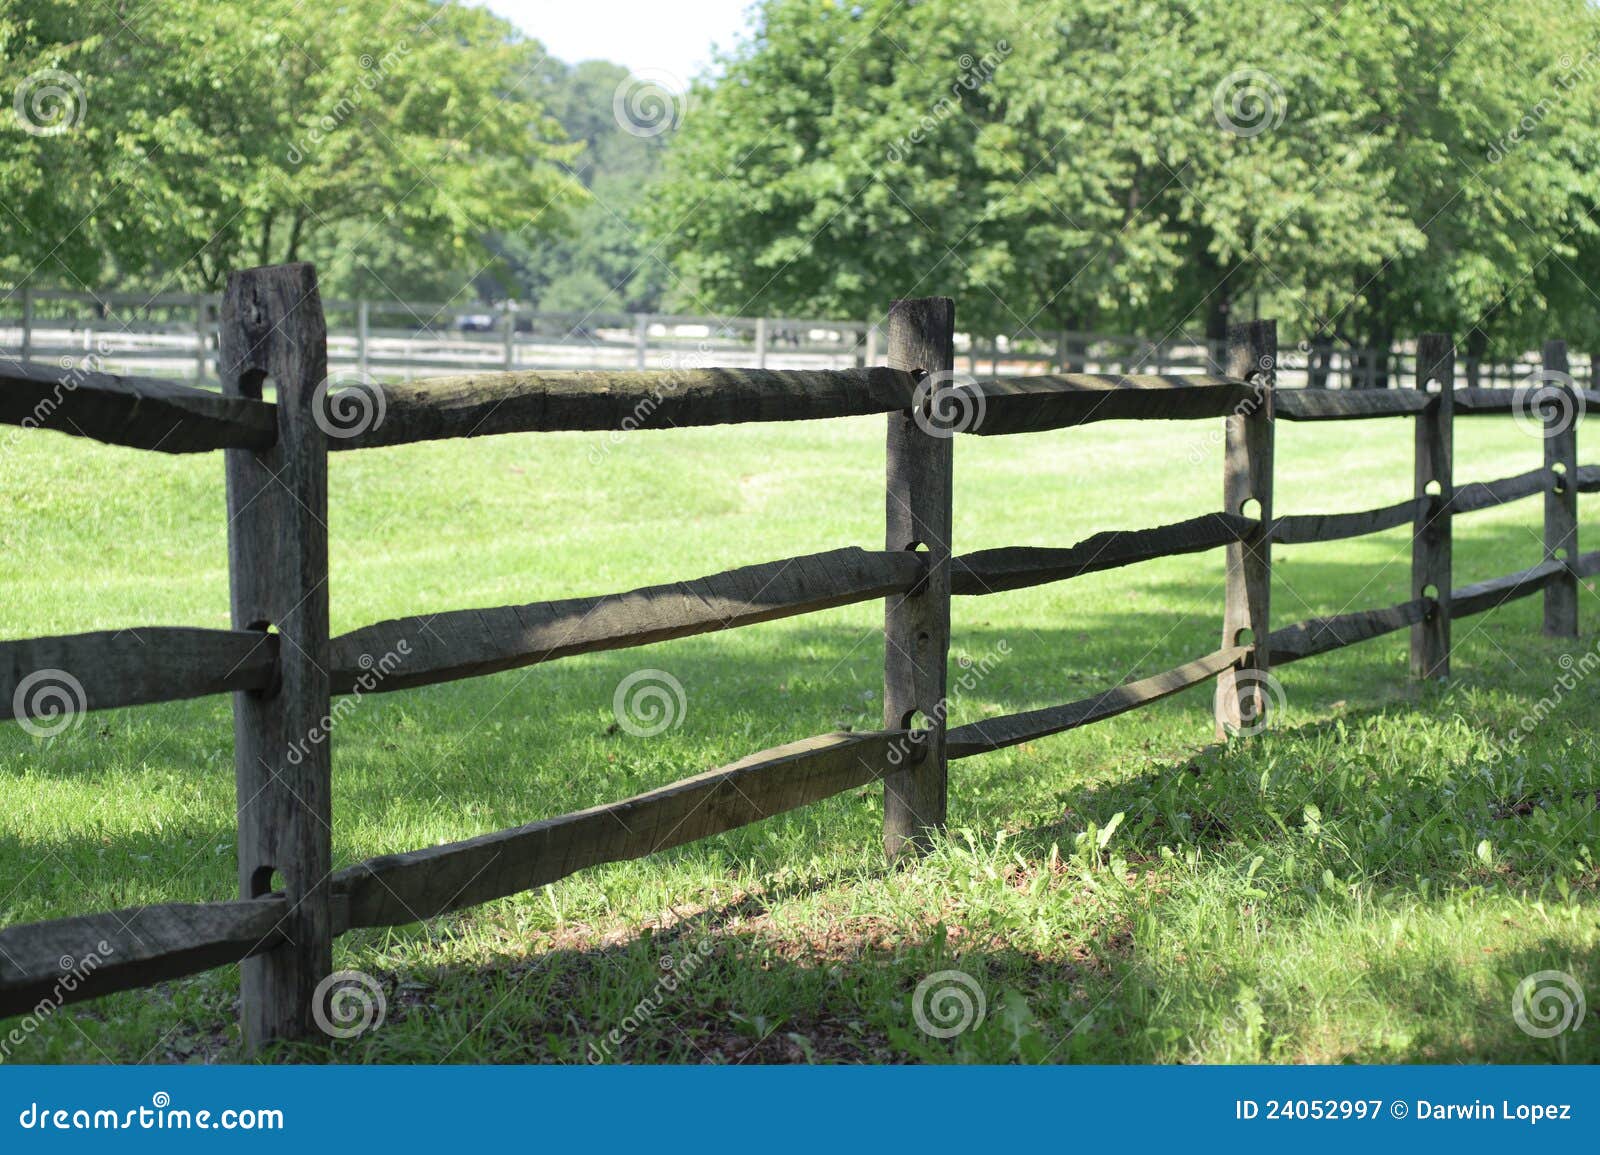 farm-fence-24052997.jpg